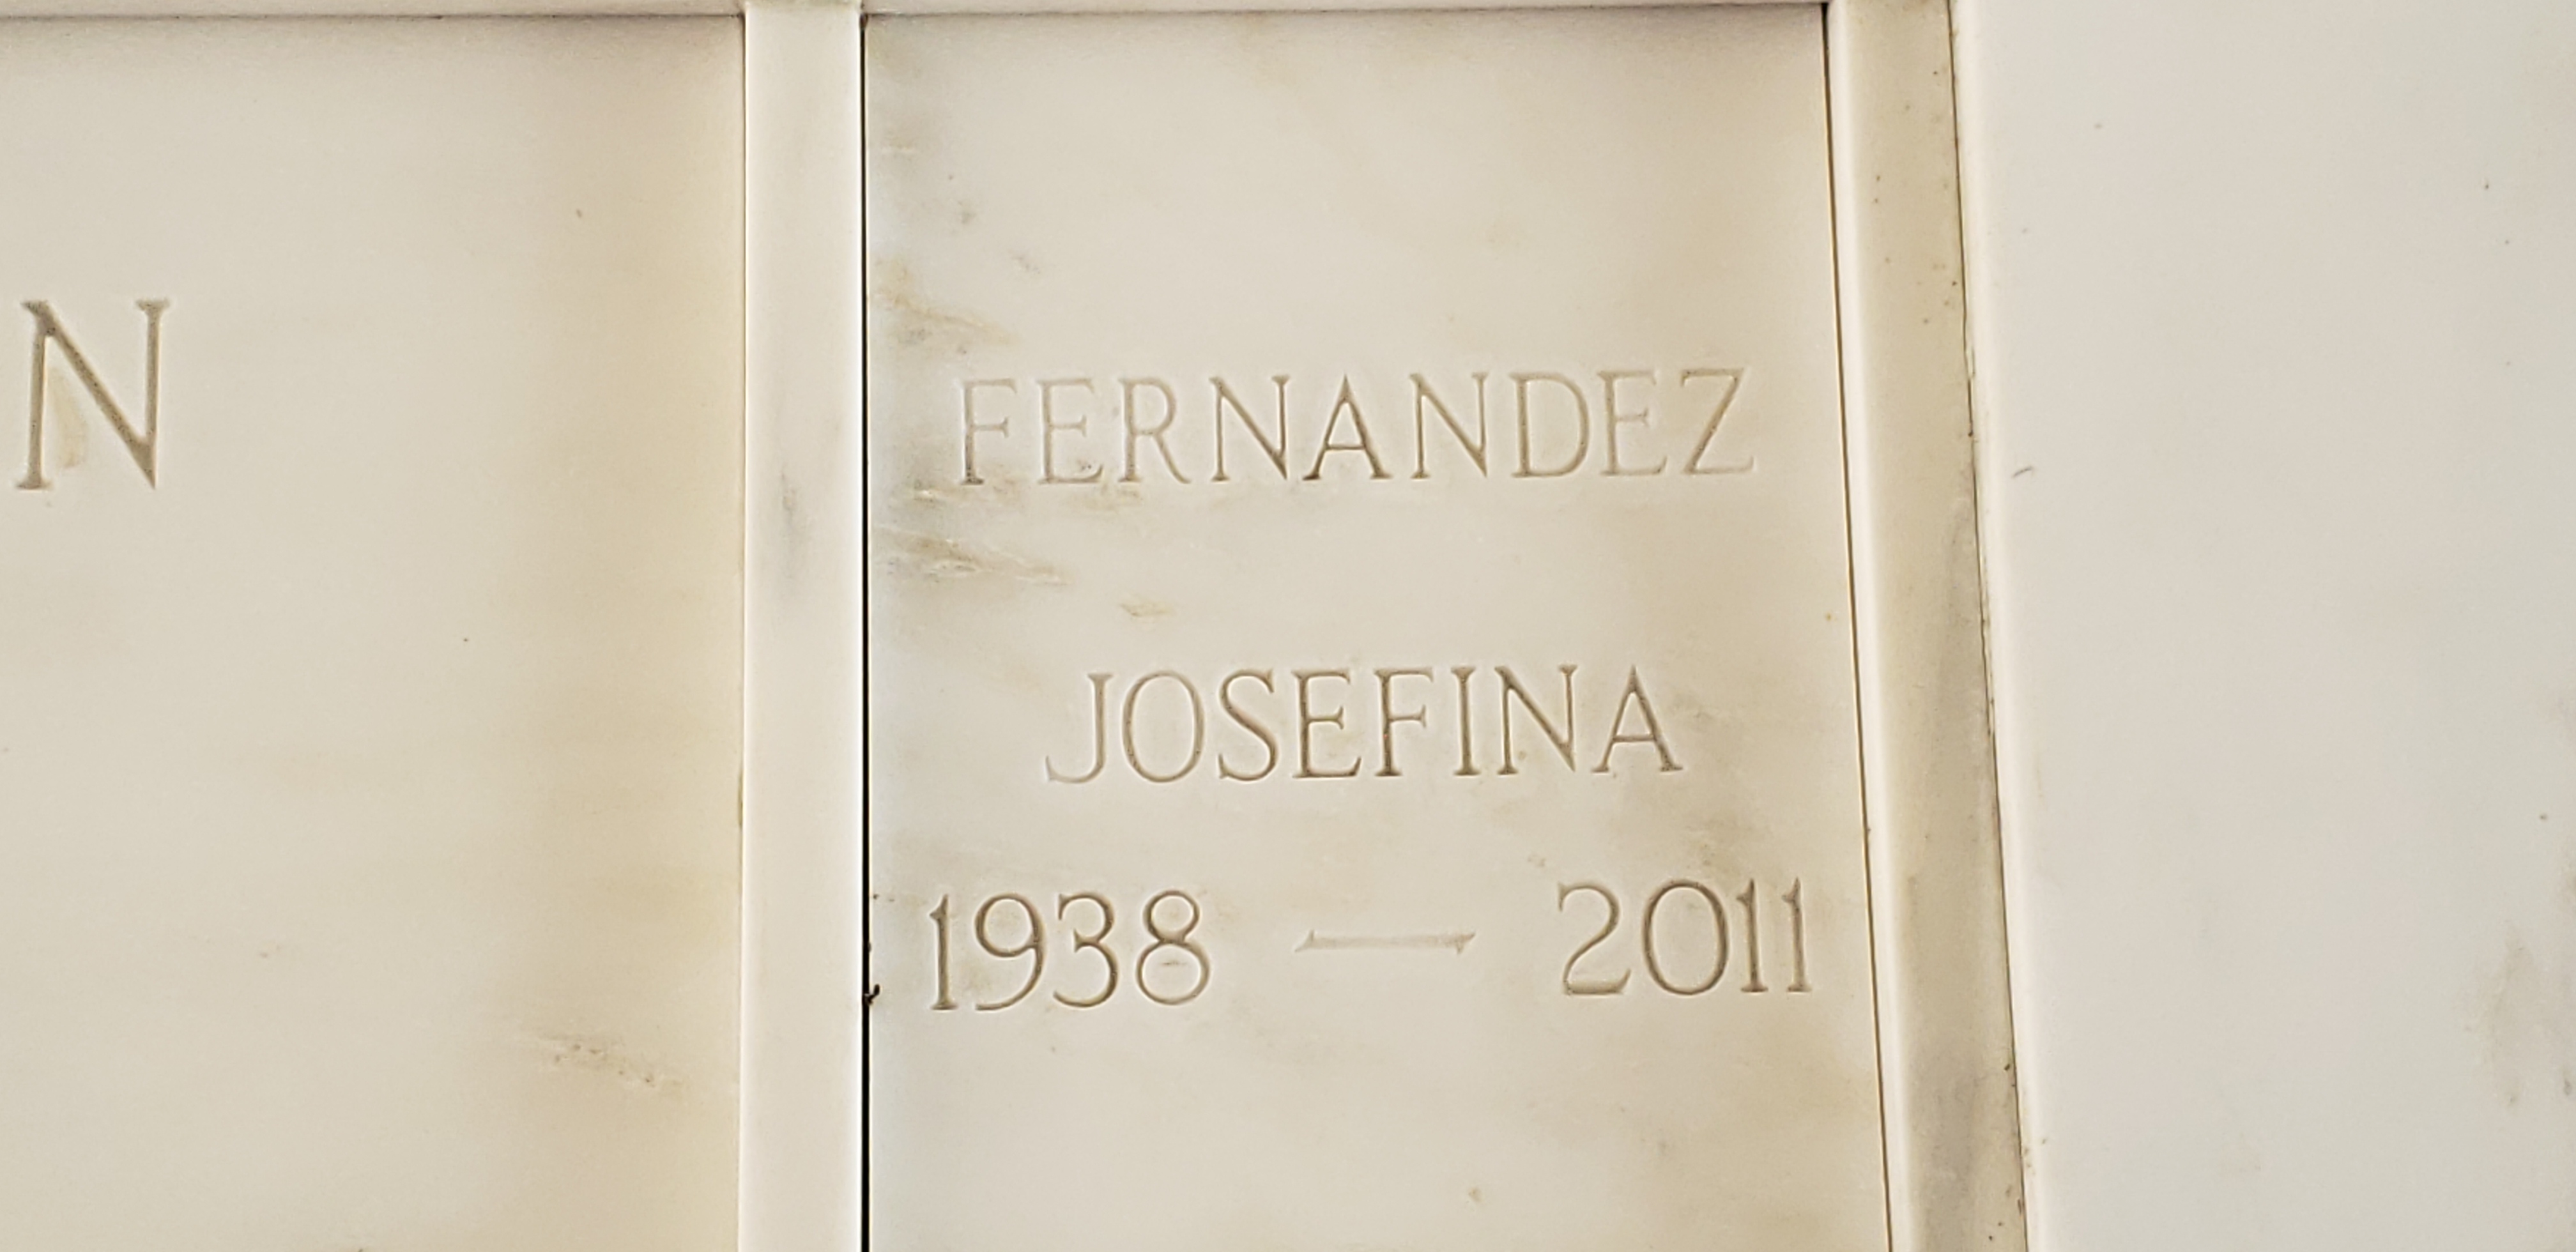 Josefina Fernandez